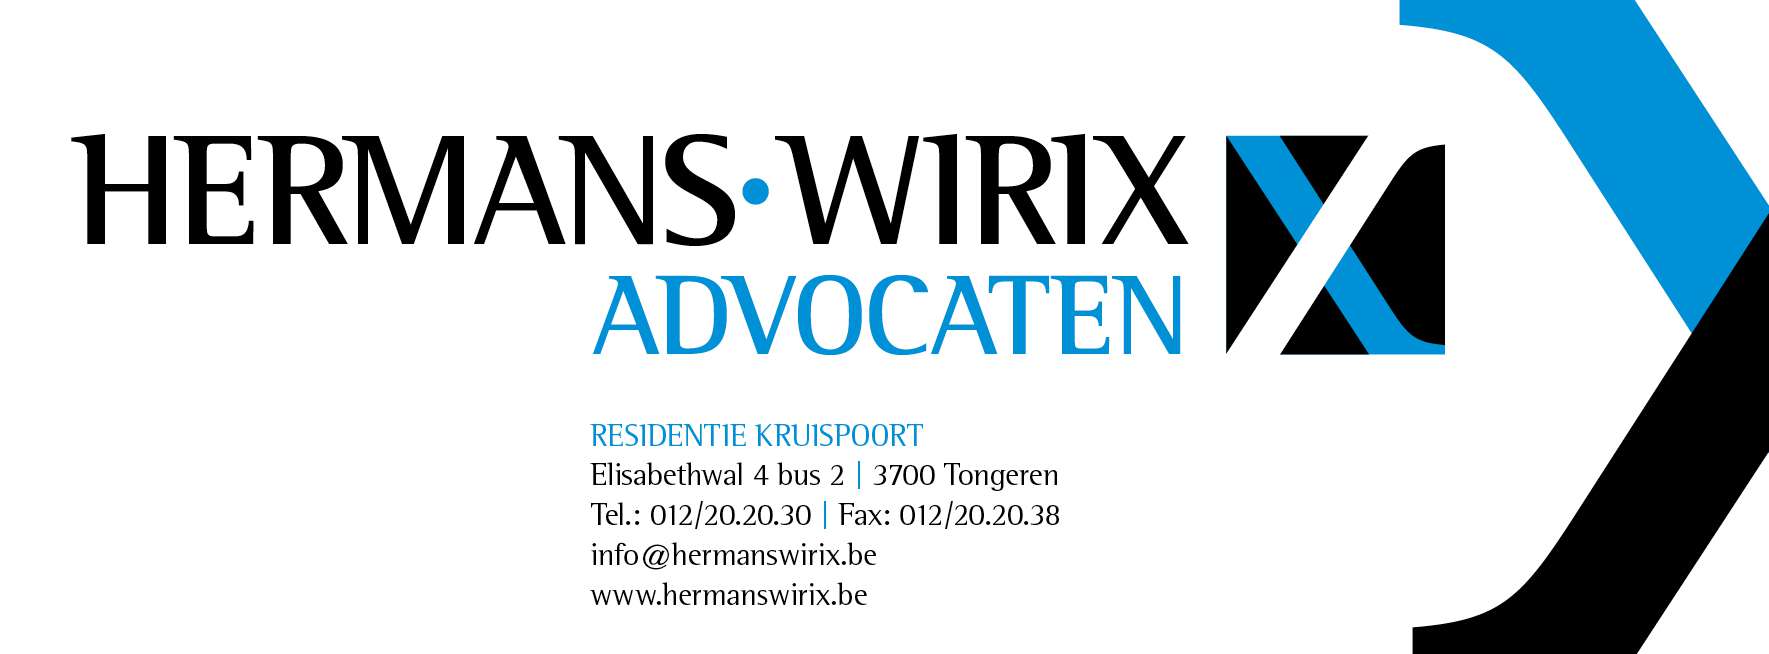 advocaten Glons Hermans-Wirix advocaten